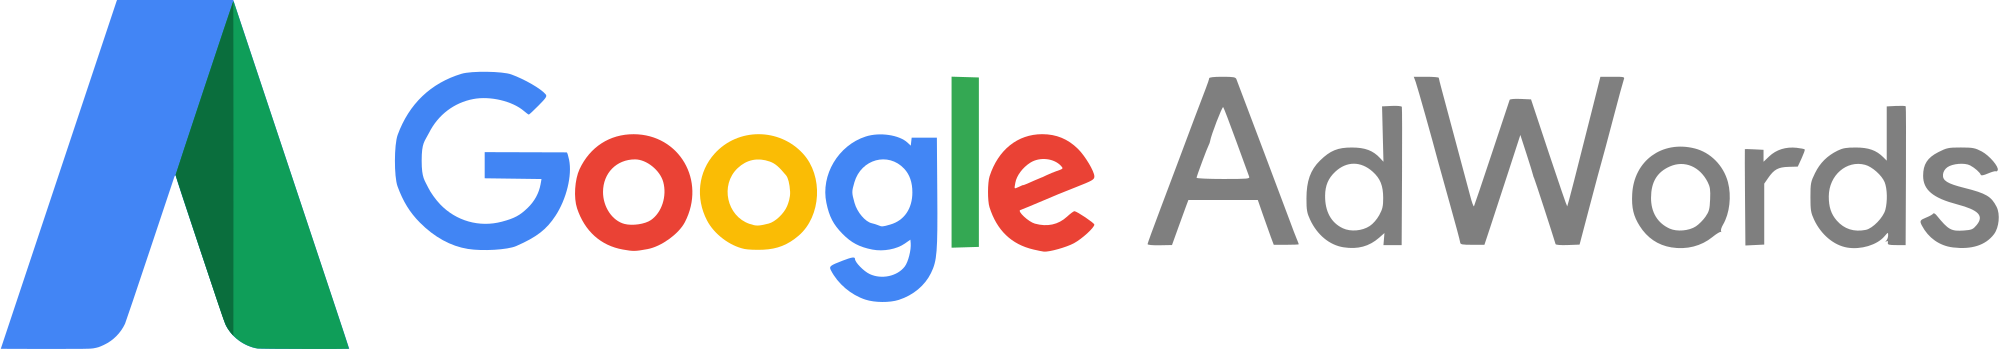 Google AdWord- Google Certifcation